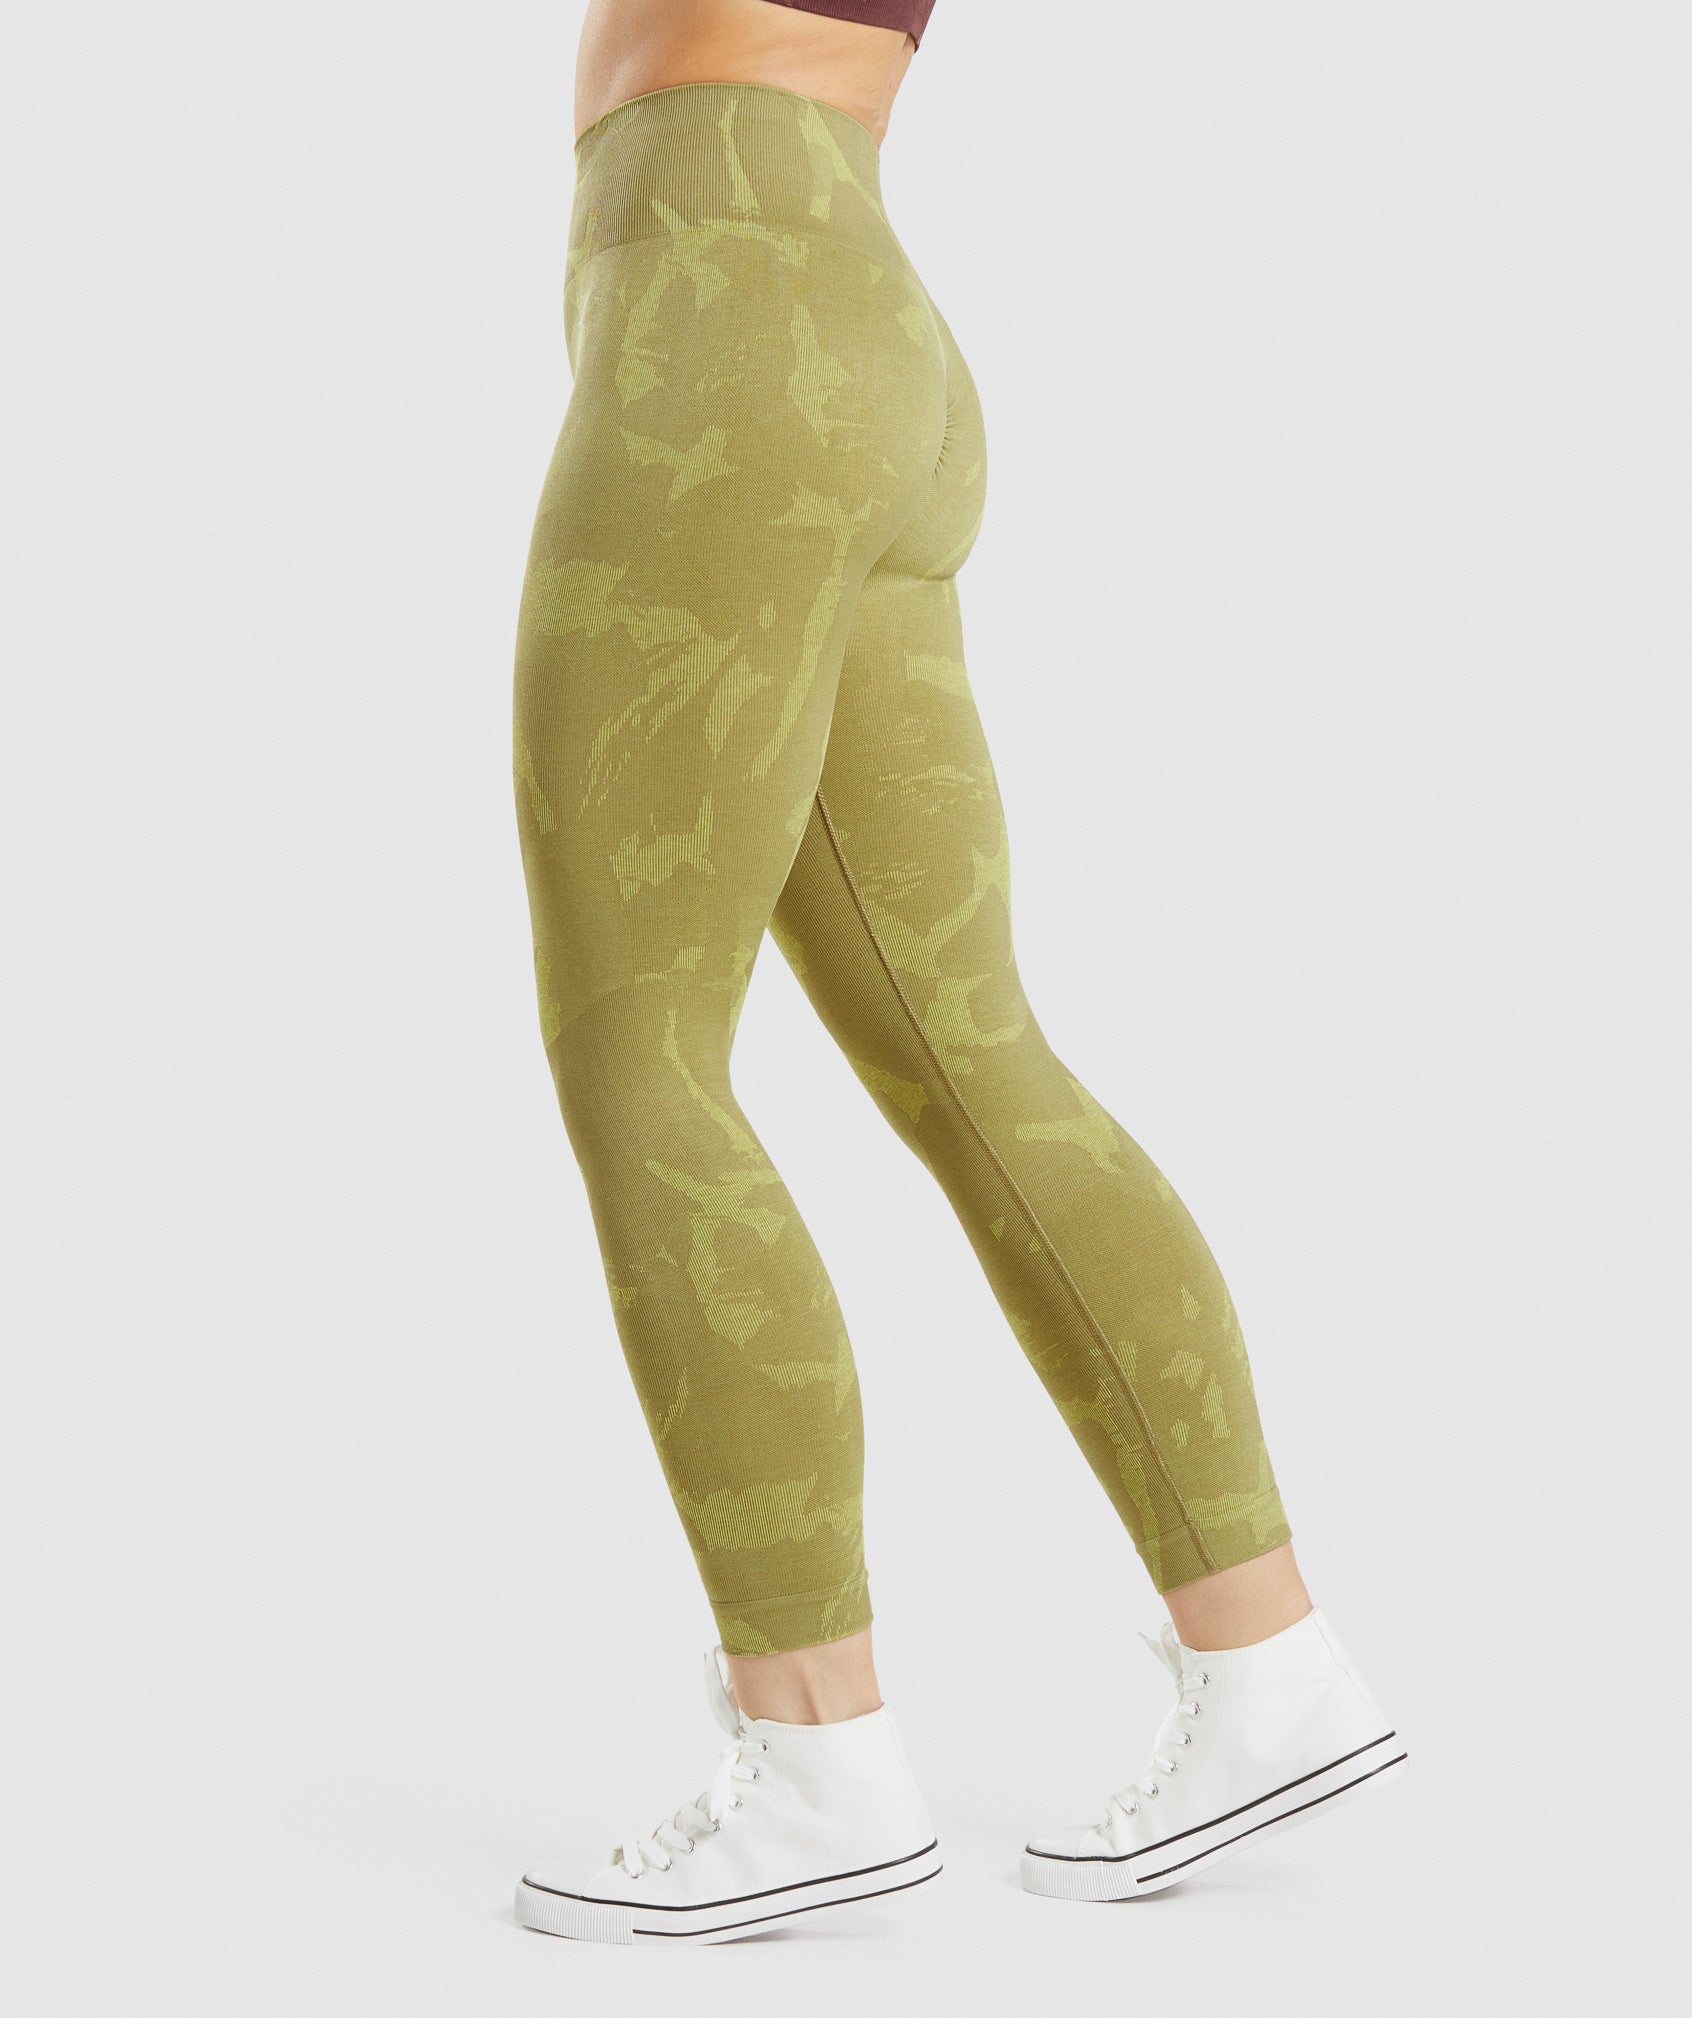 Olive Green Leggings Flirtitude Active Army Green  Green leggings, Leggings  are not pants, Animal print leggings